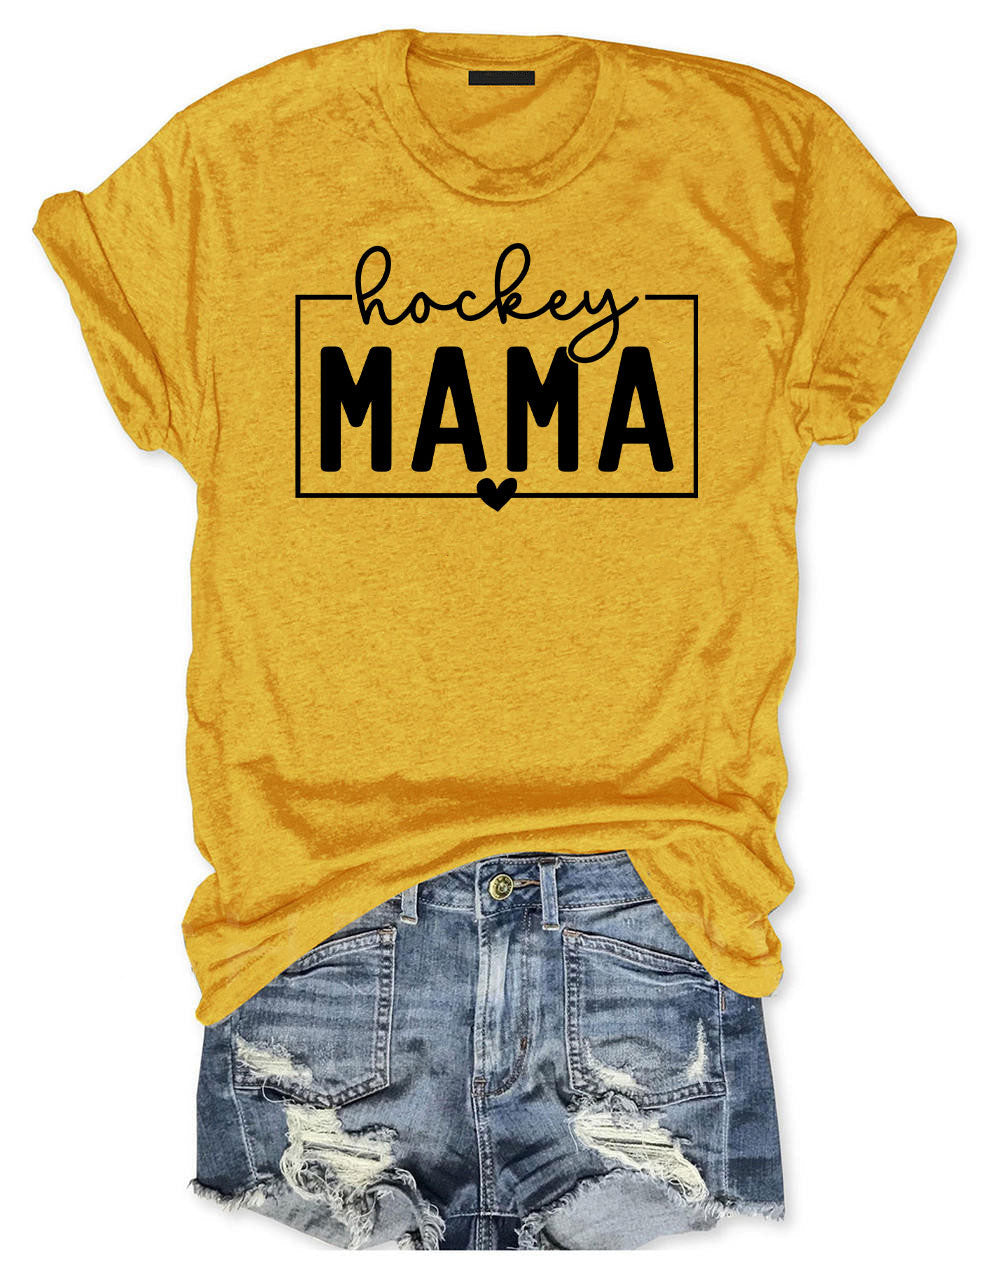 Hockey Mama T-shirt